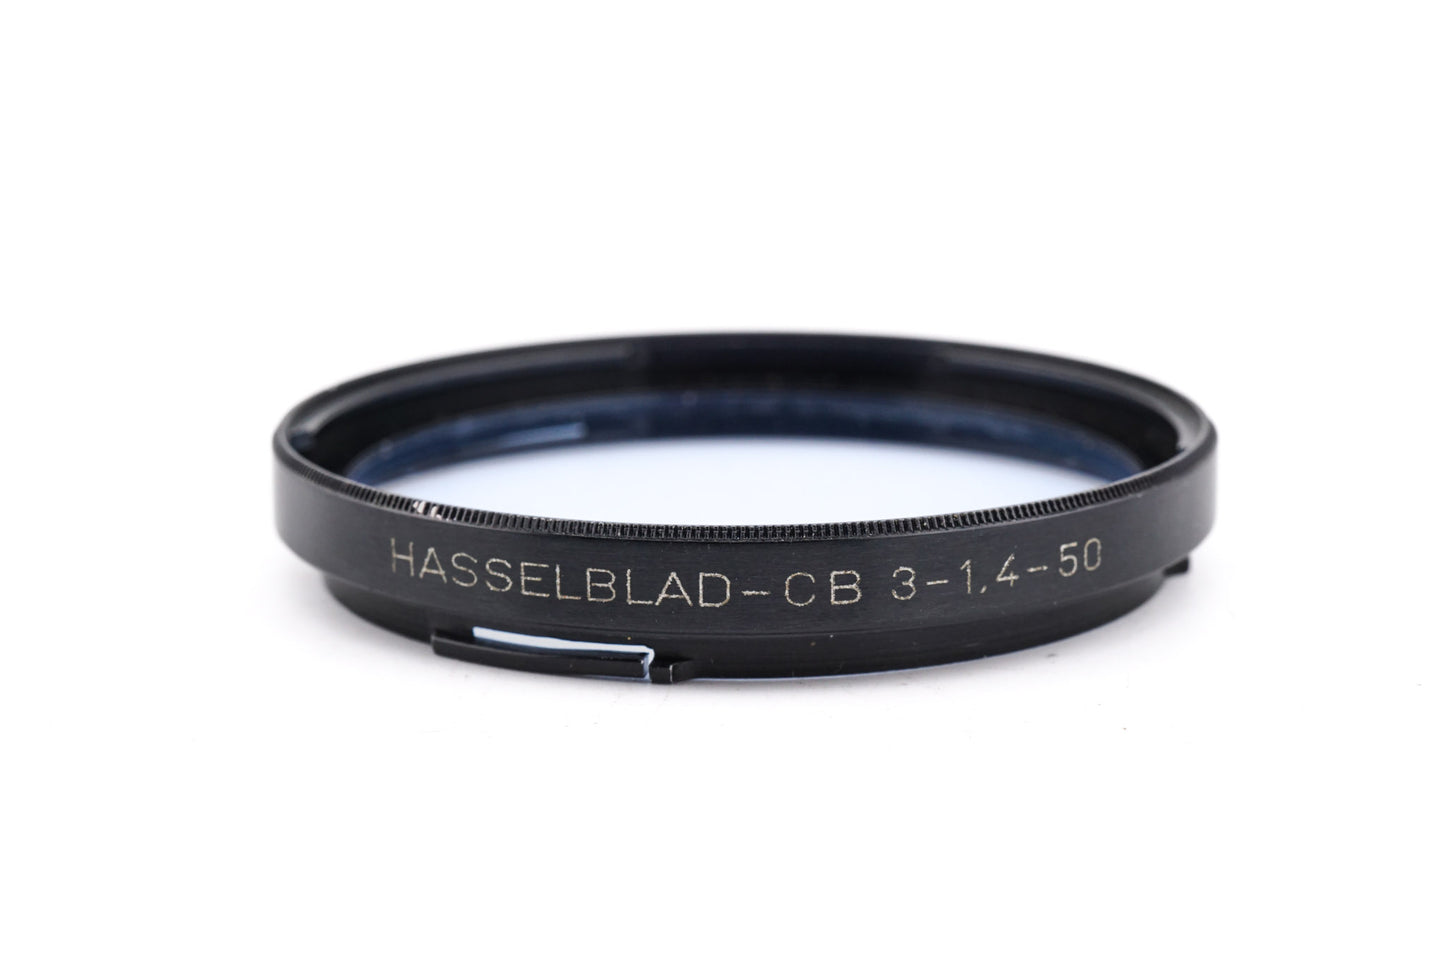 Hasselblad B50 Color Correction Filter CB 3-1.4-50 - Accessory